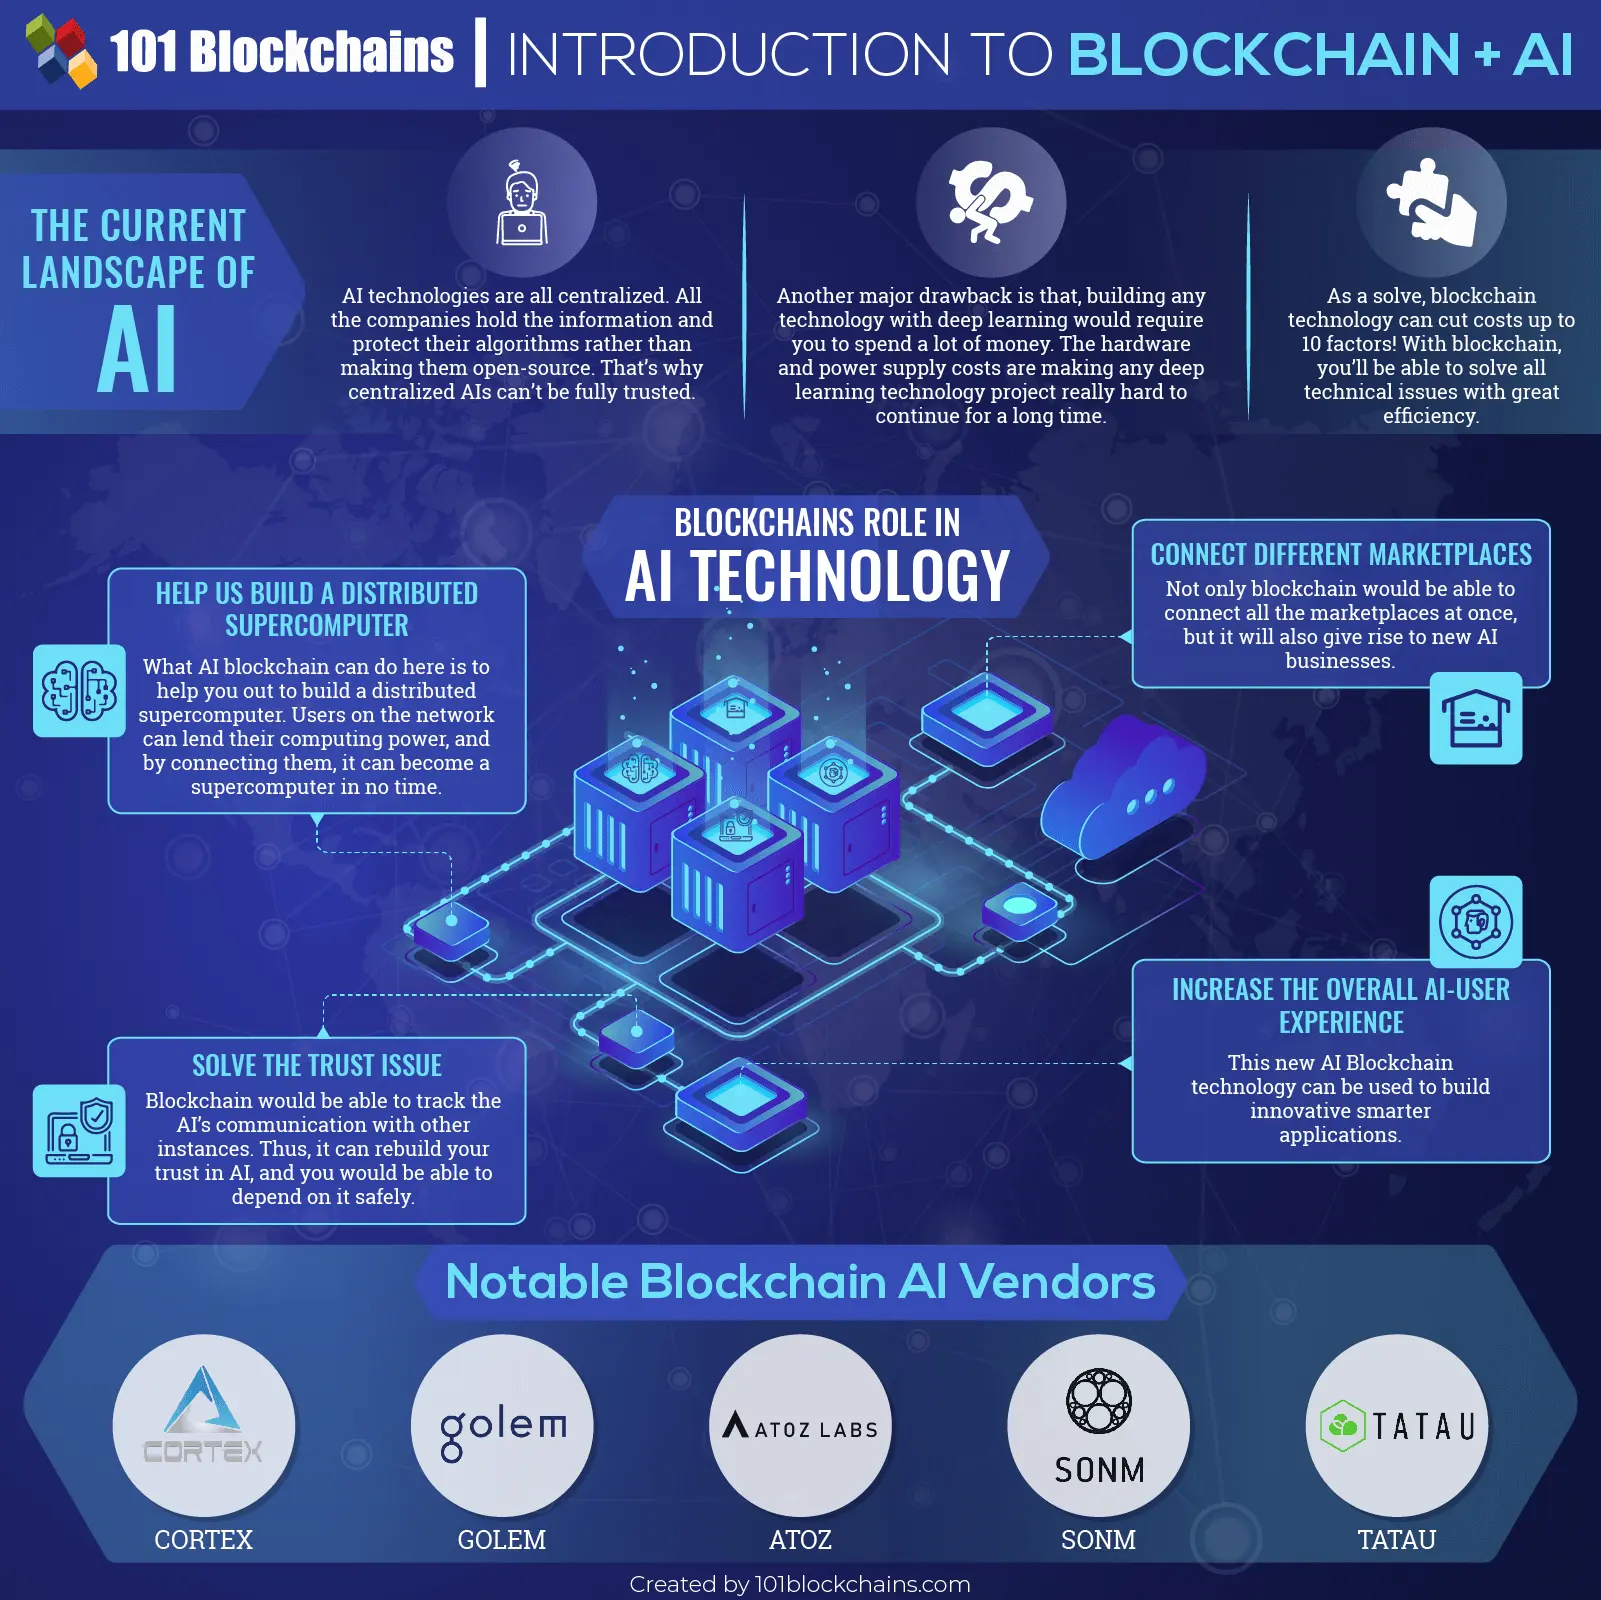 Introduction to Blockchain + AI